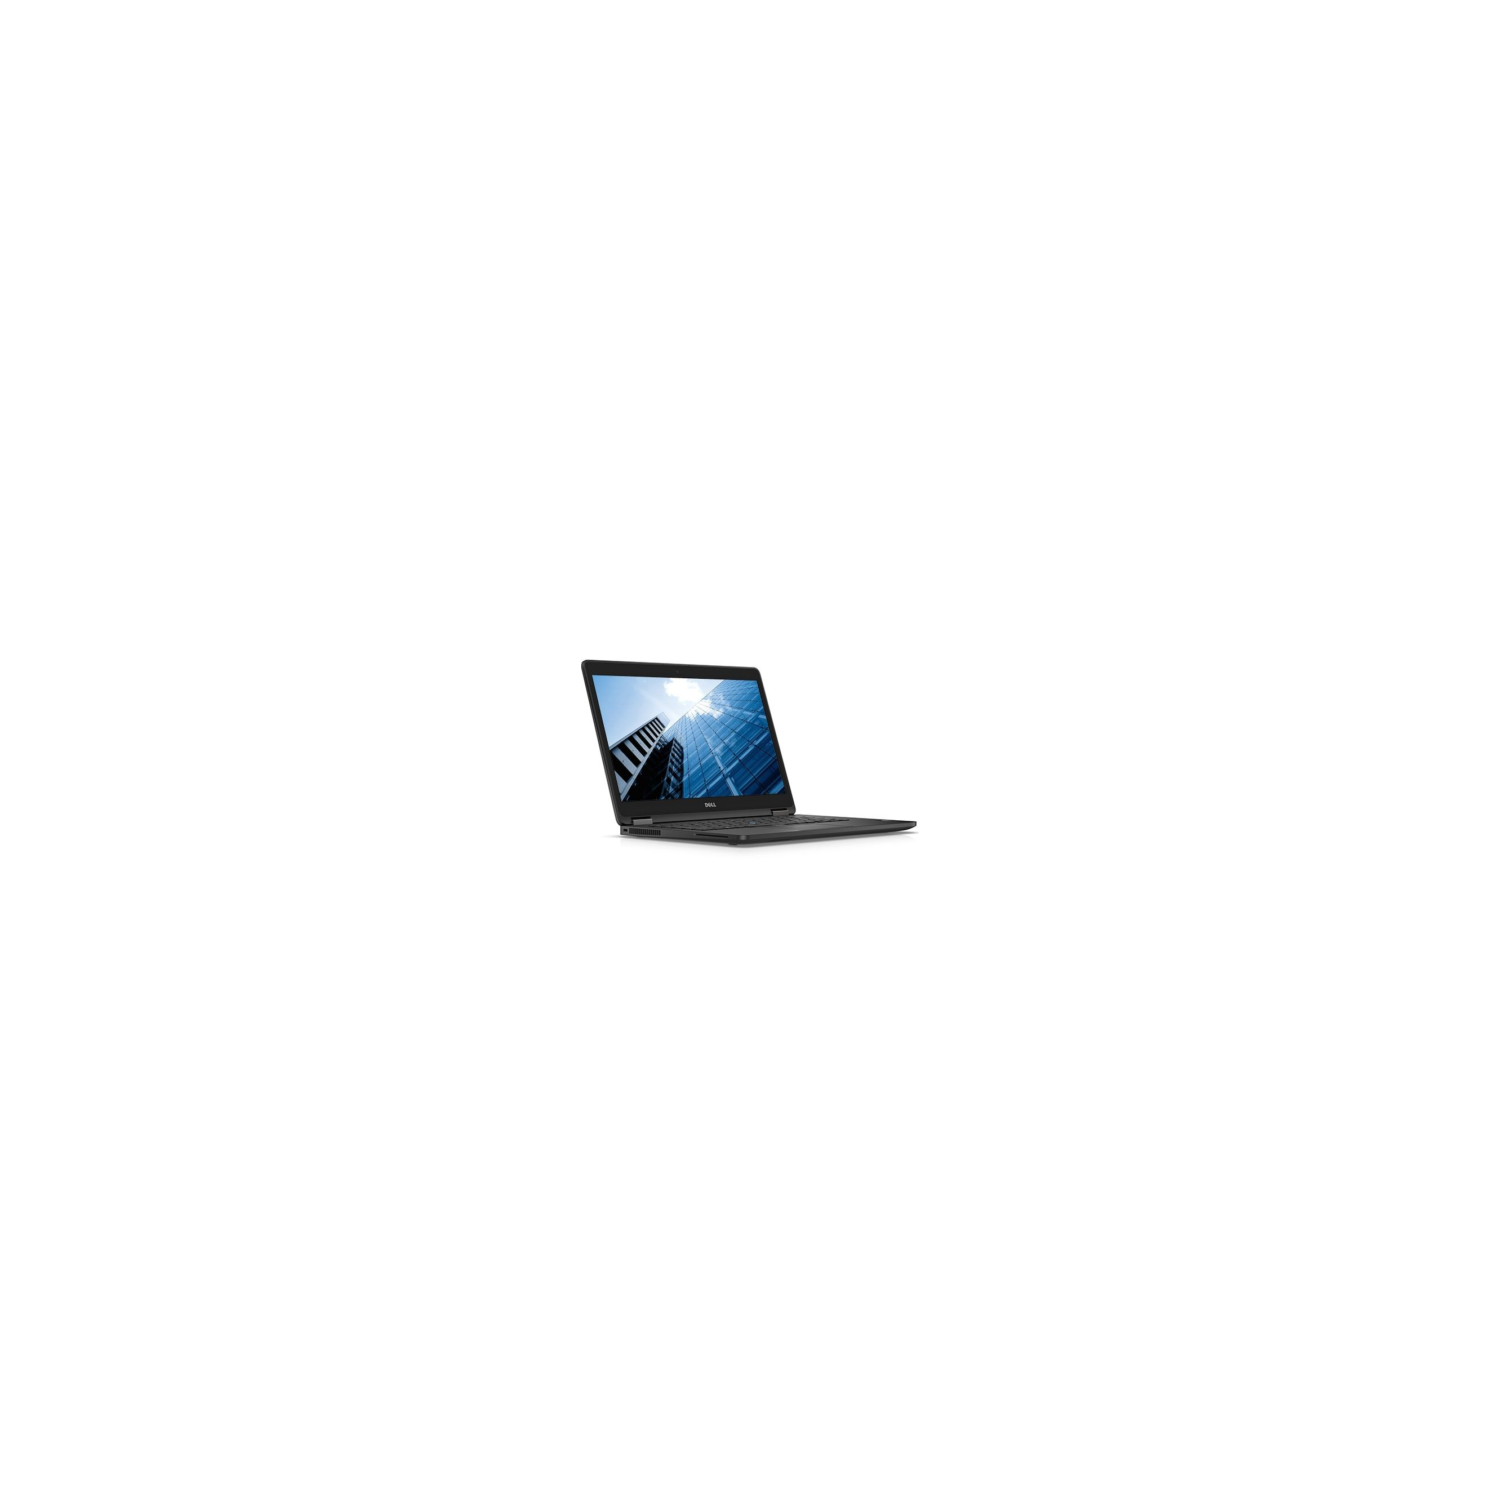 Refurbished (Good) - DELL Latitude E7470 UltraBook i5-6300U, 16GB, 512GB SSD, 14"HD (1366x768), WEBCAM, WiFi, BT 4.1